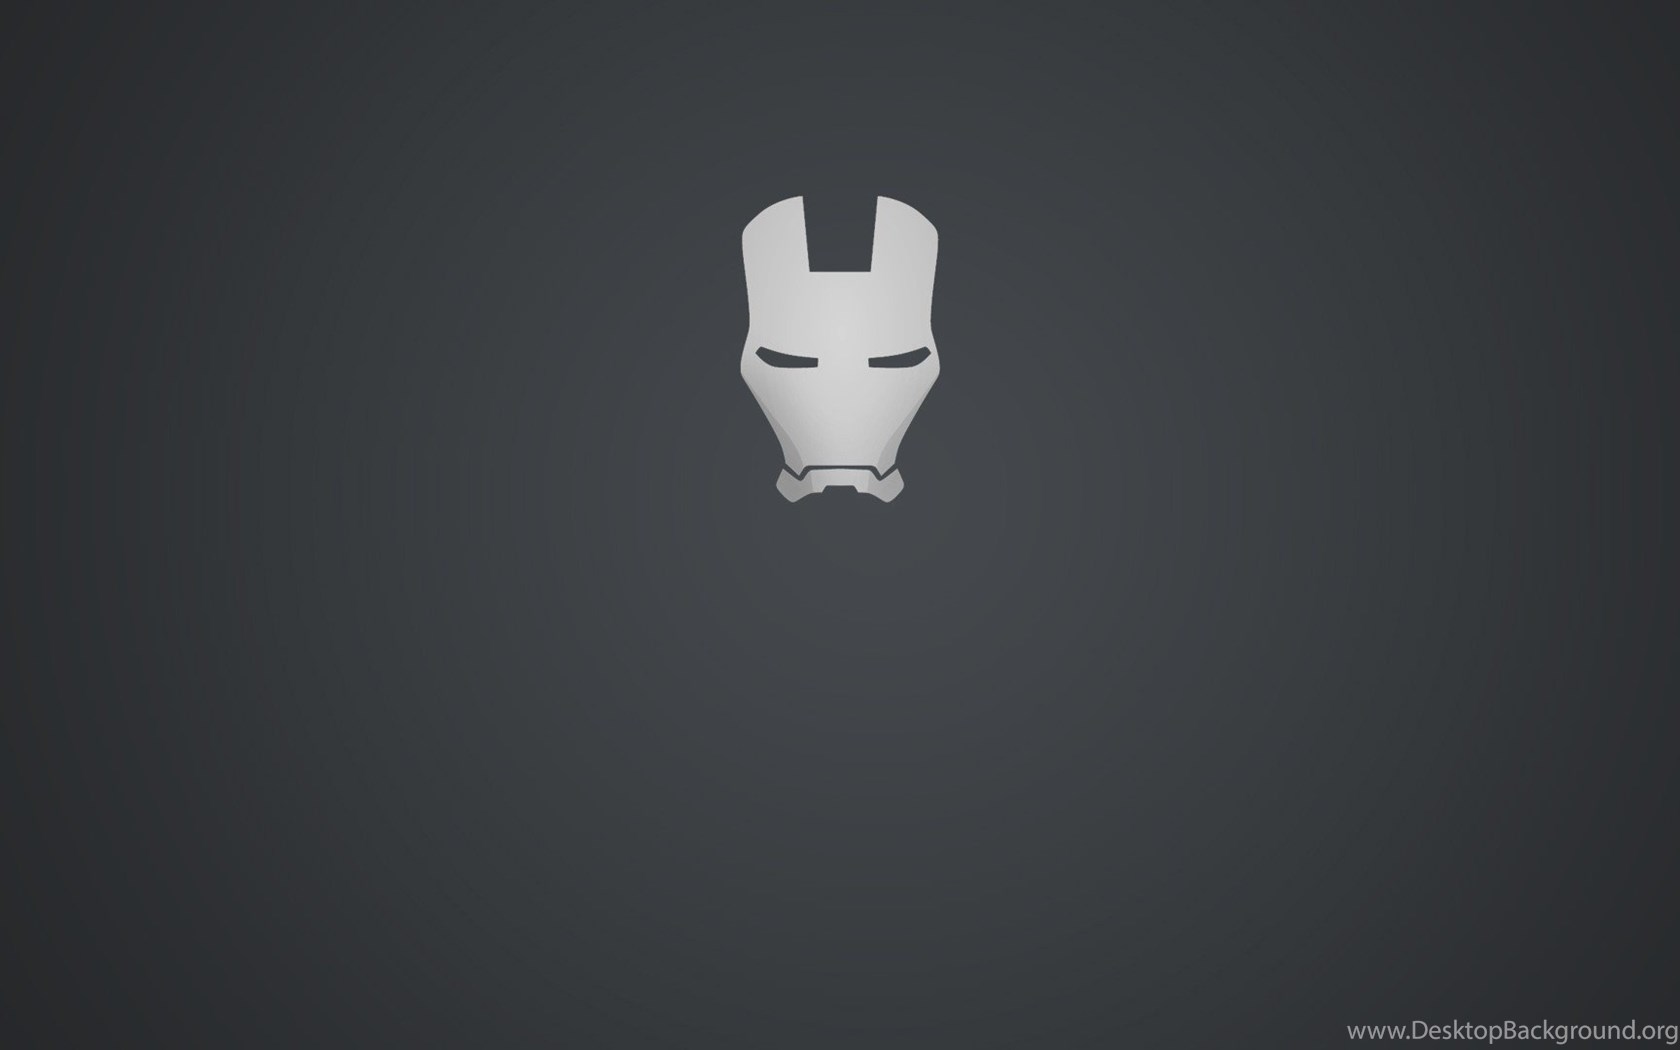 Iron Man Mask, Black Background Wallpaper And Image Wallpaper. Desktop Background